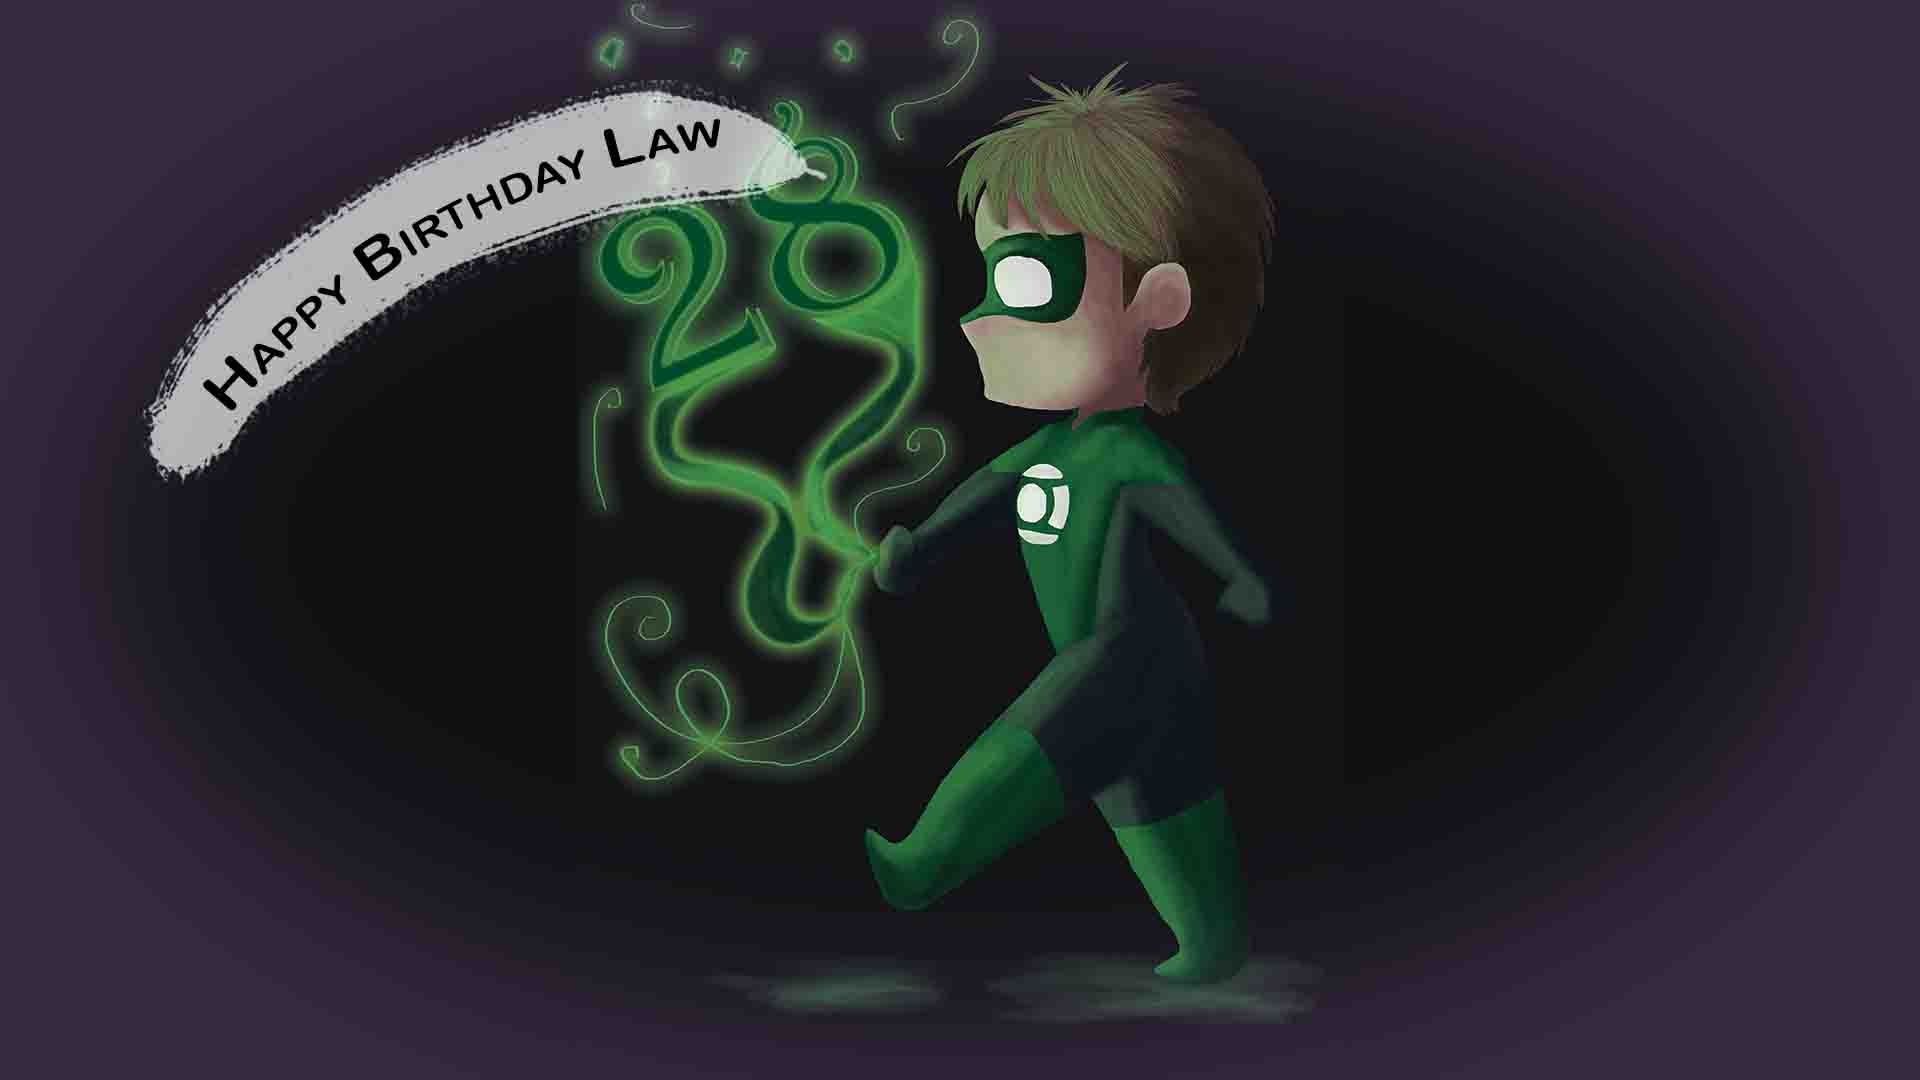 1920x1080 Birthday Art for Law // Green Lantern Chibi